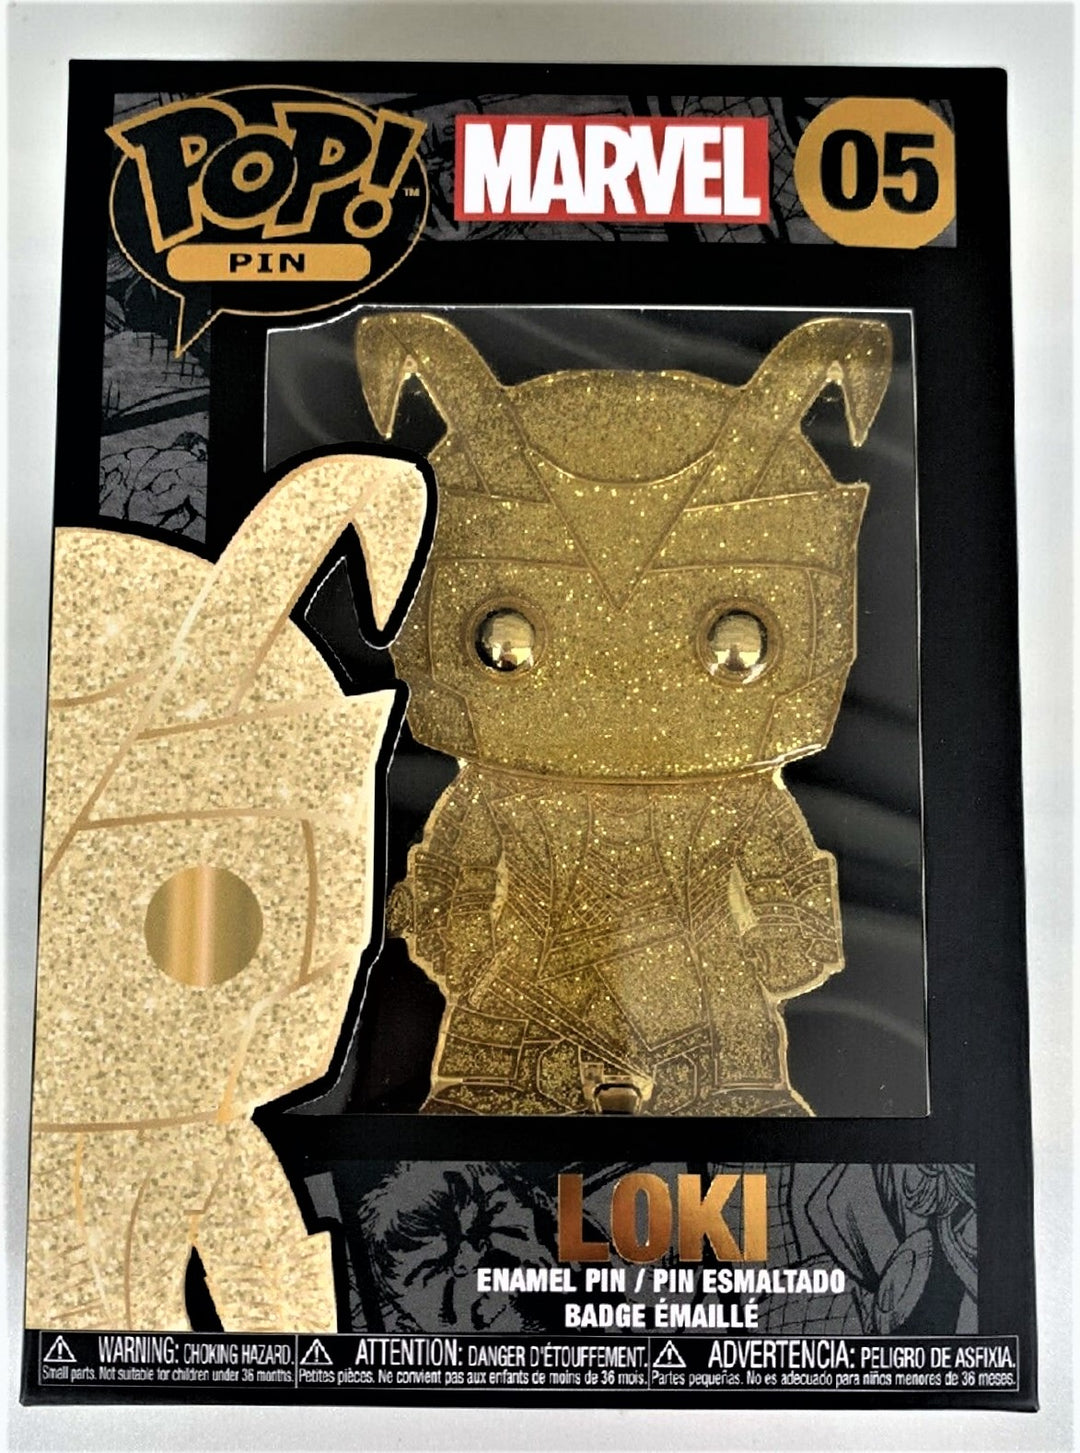 Funko Pop! Pin - Marvel Loki #05 Chase Enamel Pin